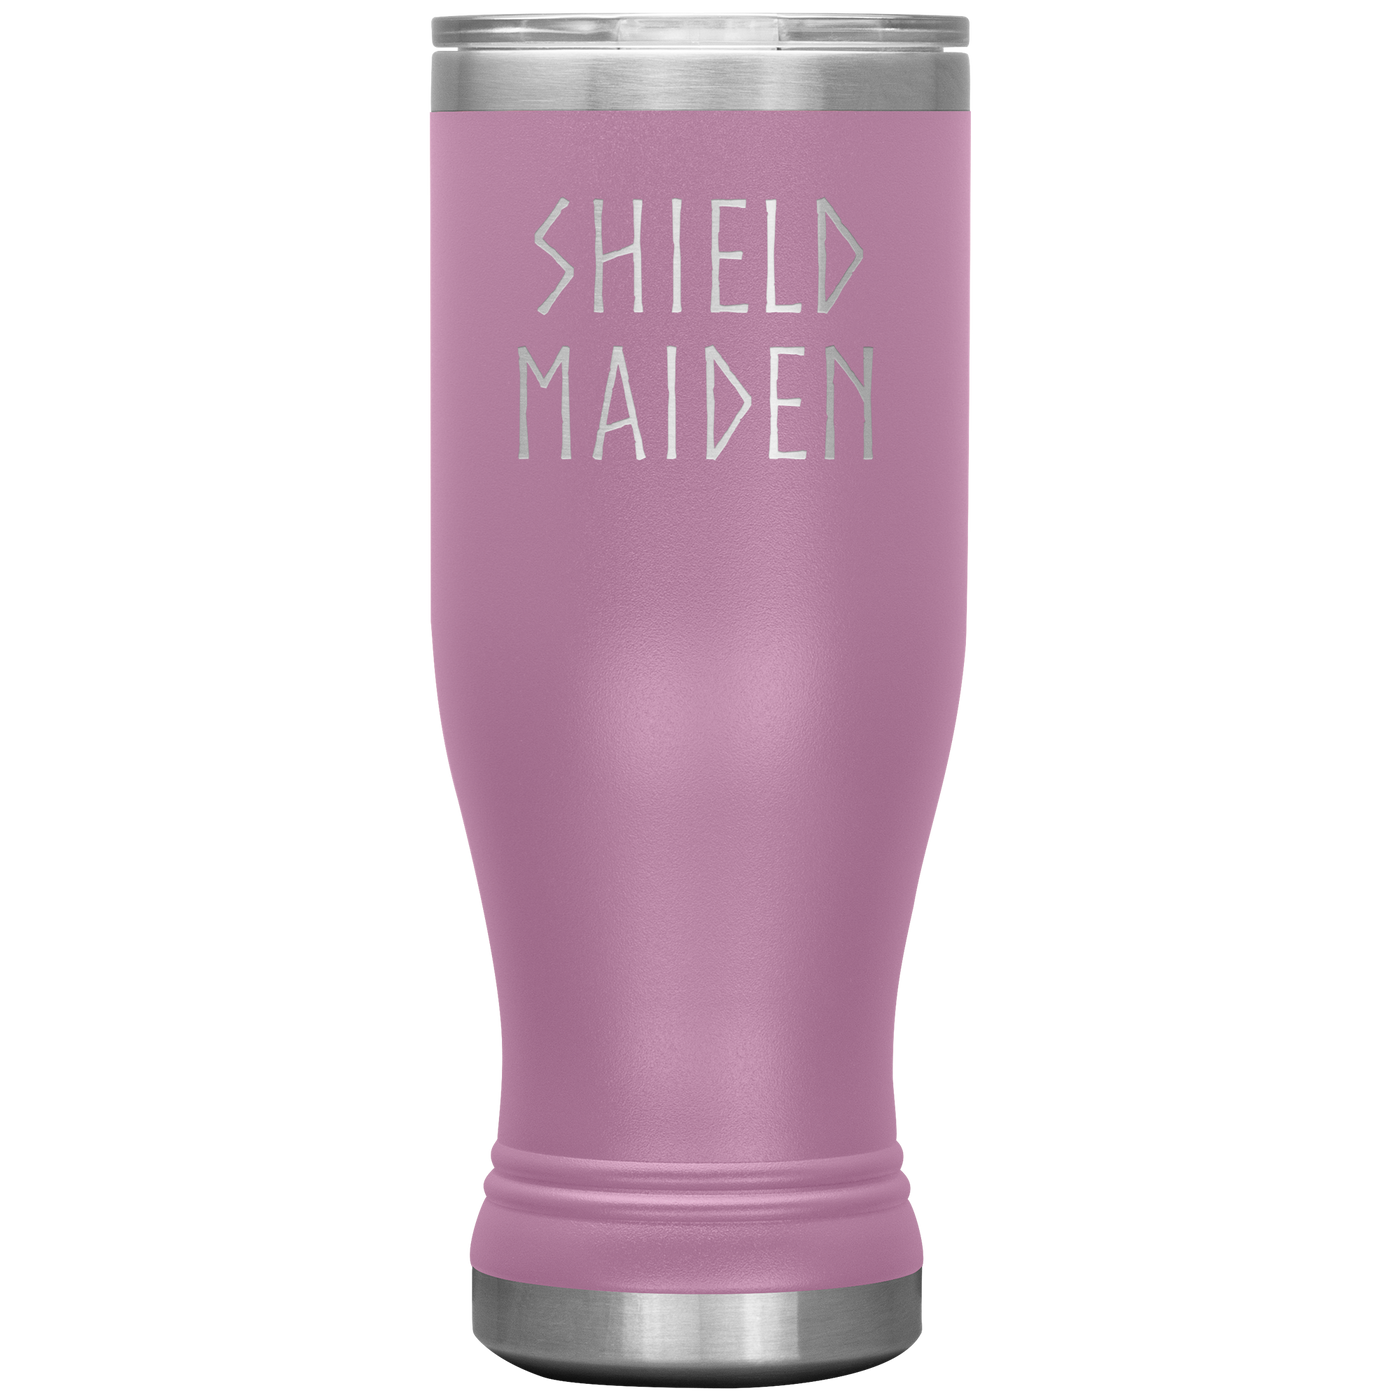 Shield Maiden Insulated Tumbler Scandinavian Design Studio